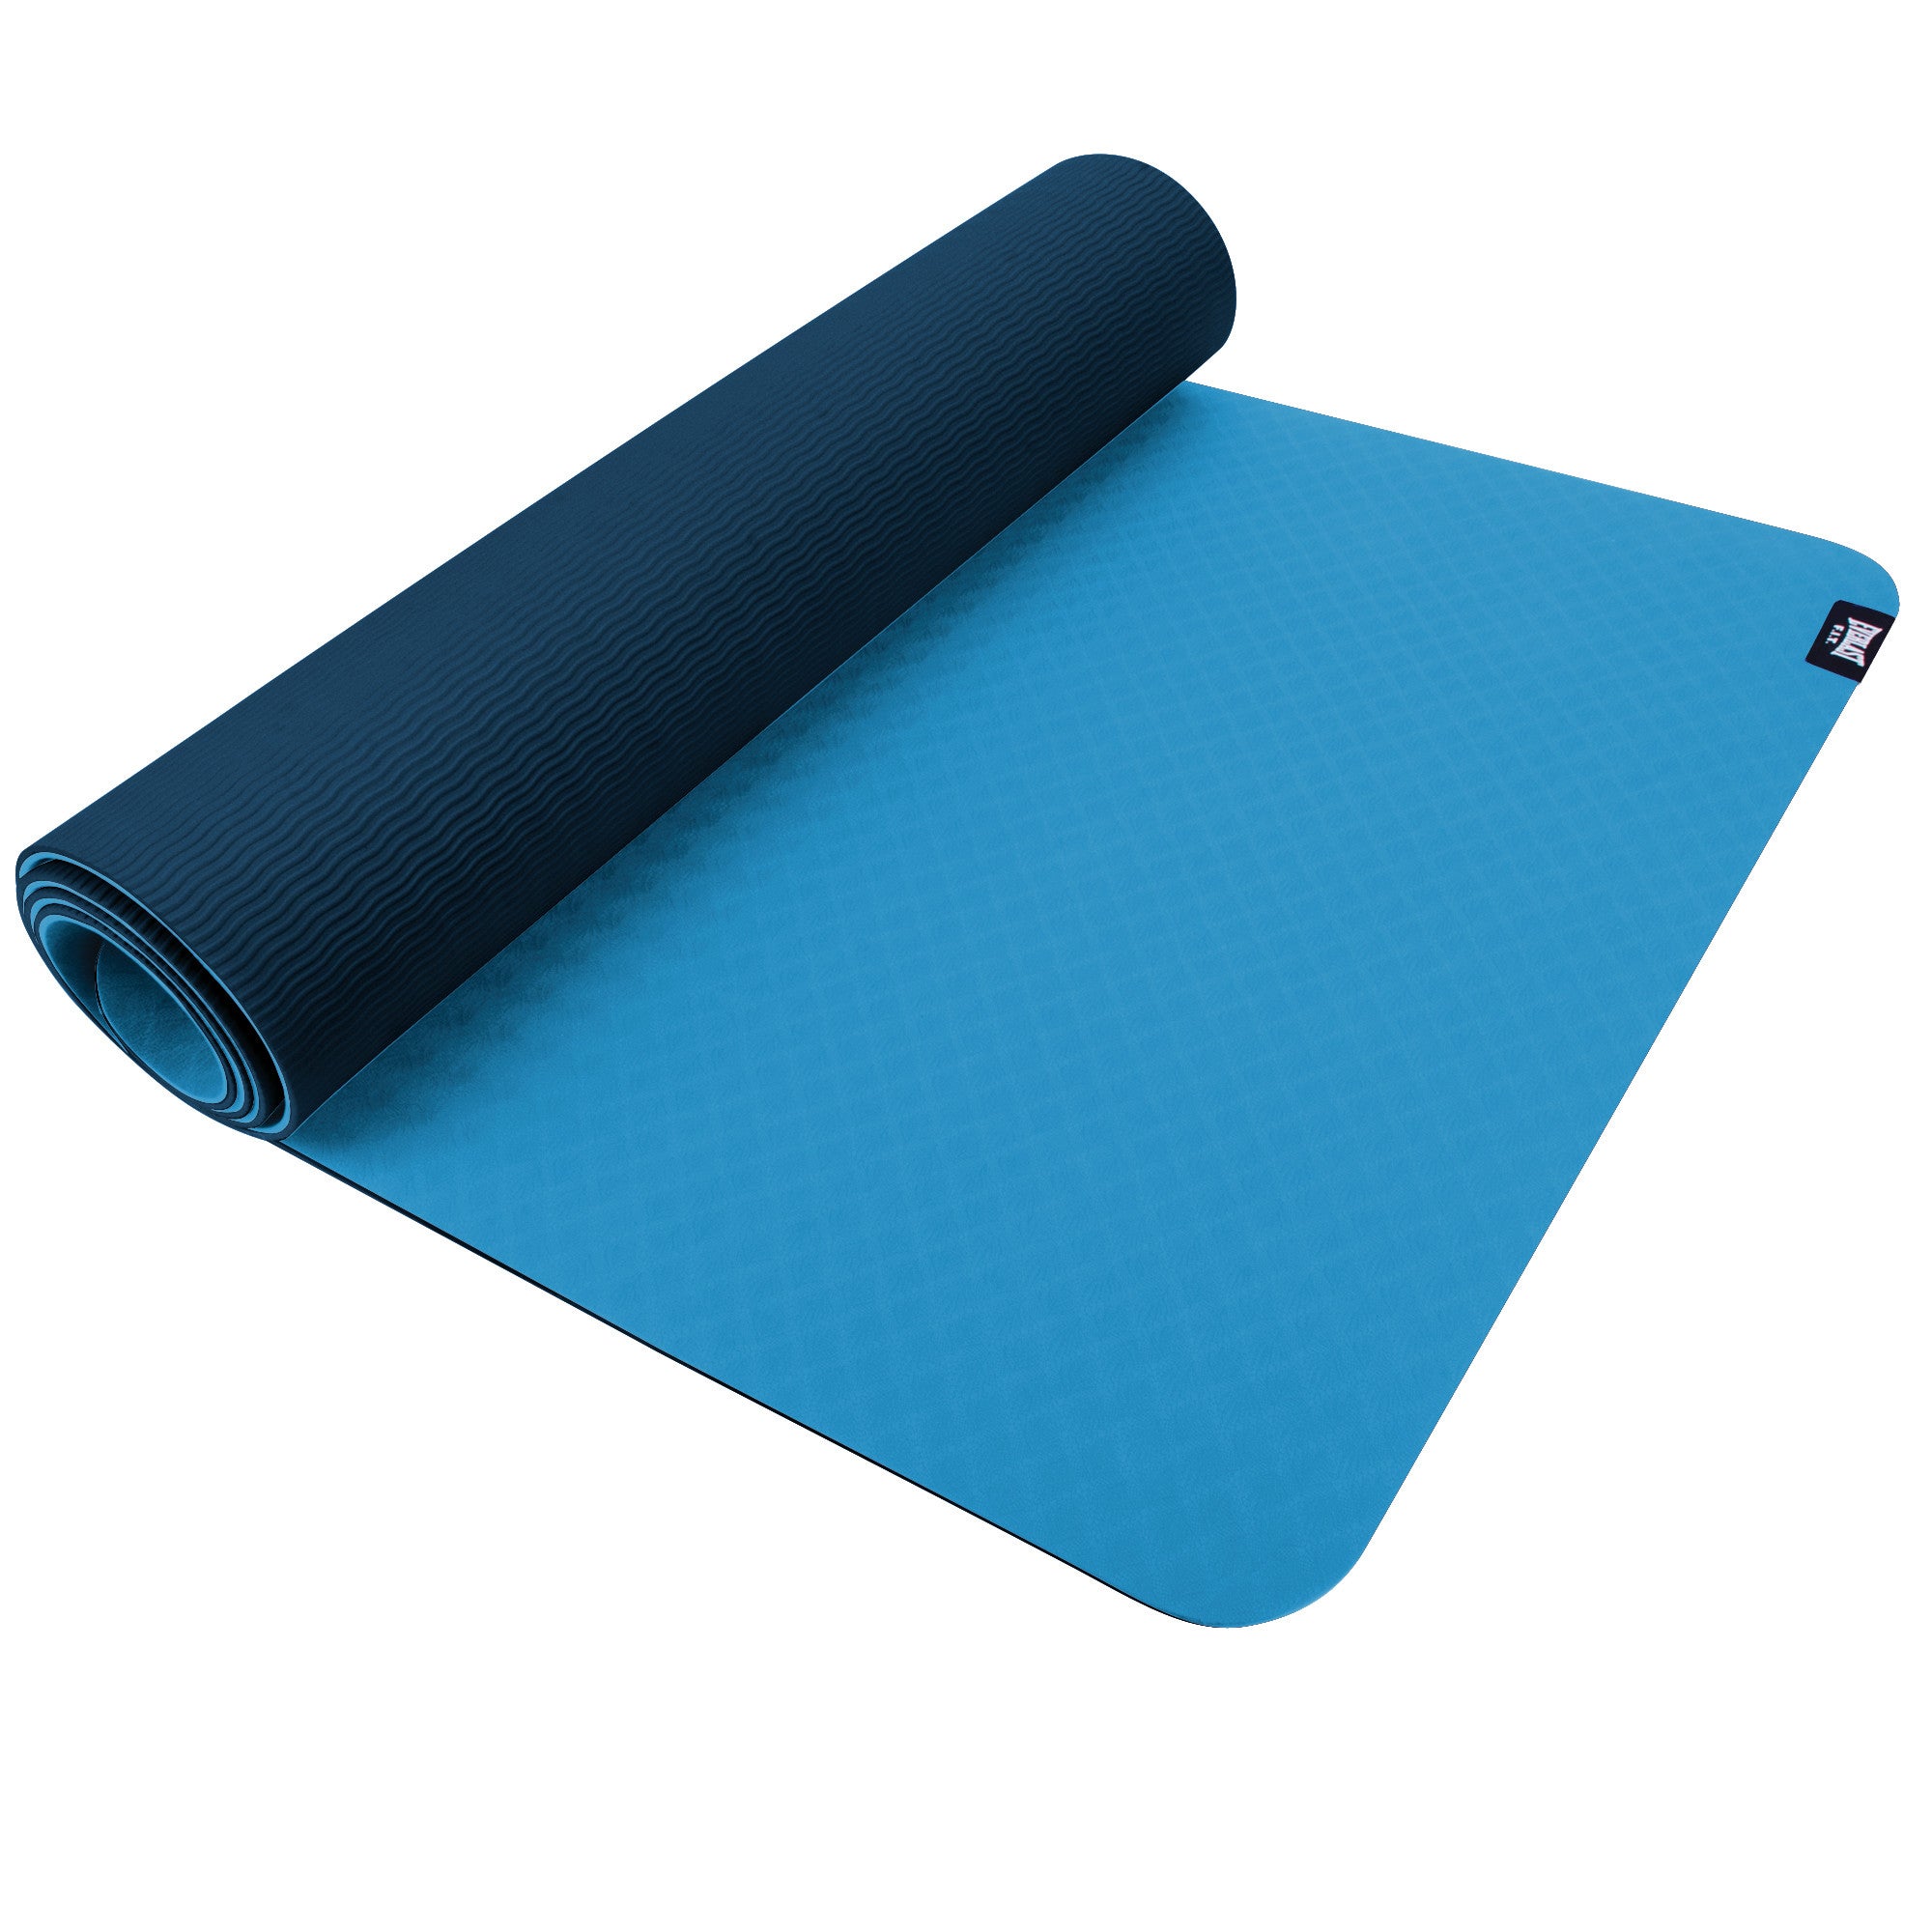 Summit Yoga Mat by Sunshine Yoga (74 x 26 x 6mm)